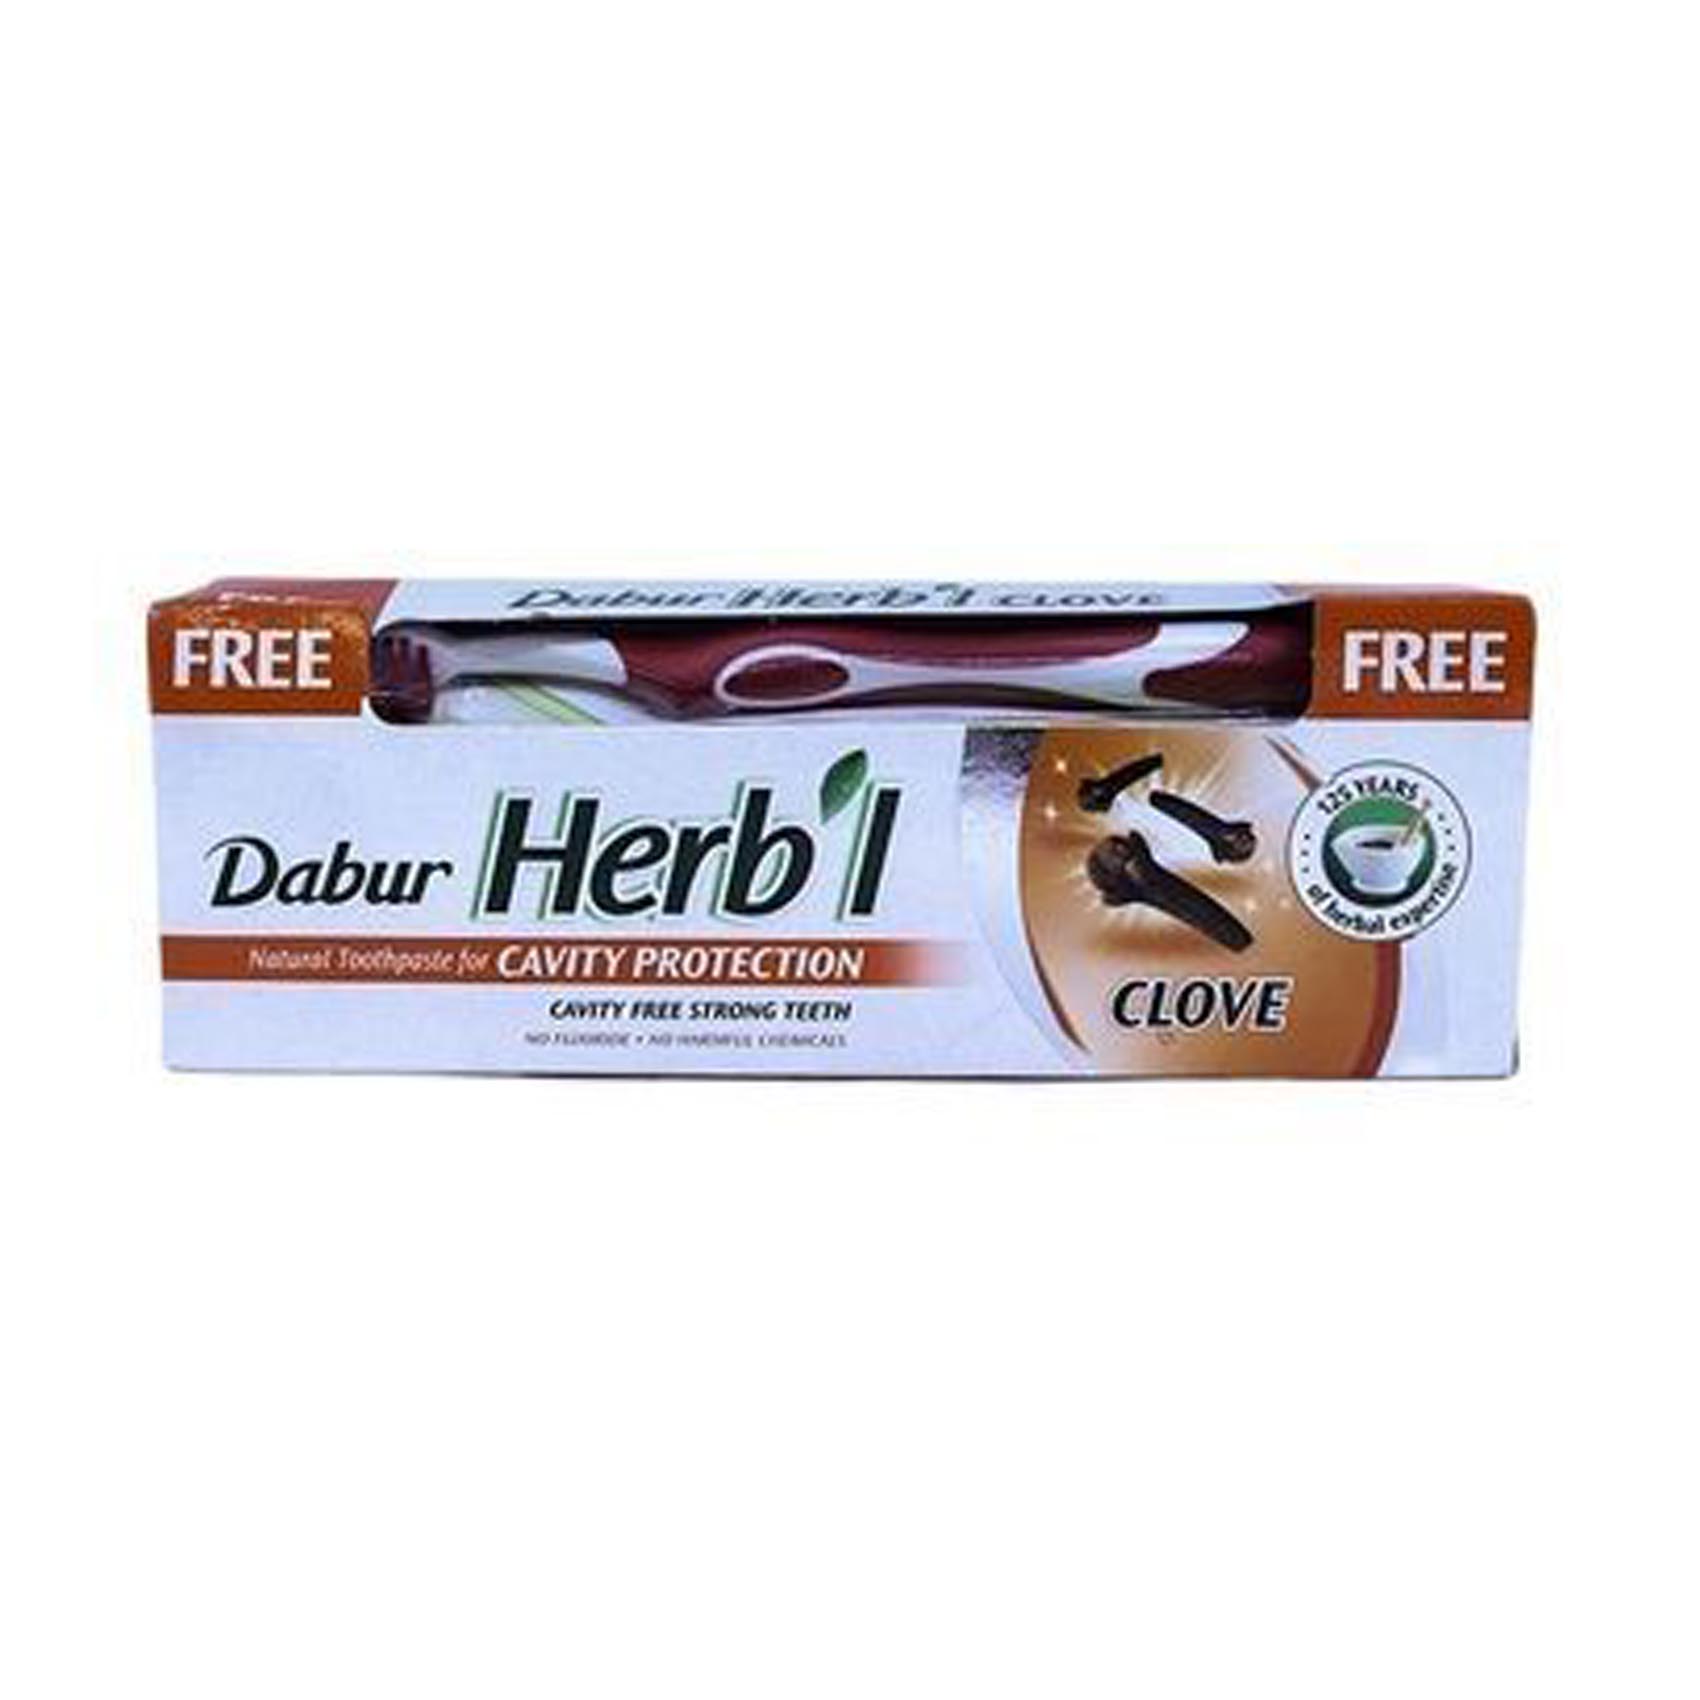 Dabur Herbal Tooth Paste Clove 150G